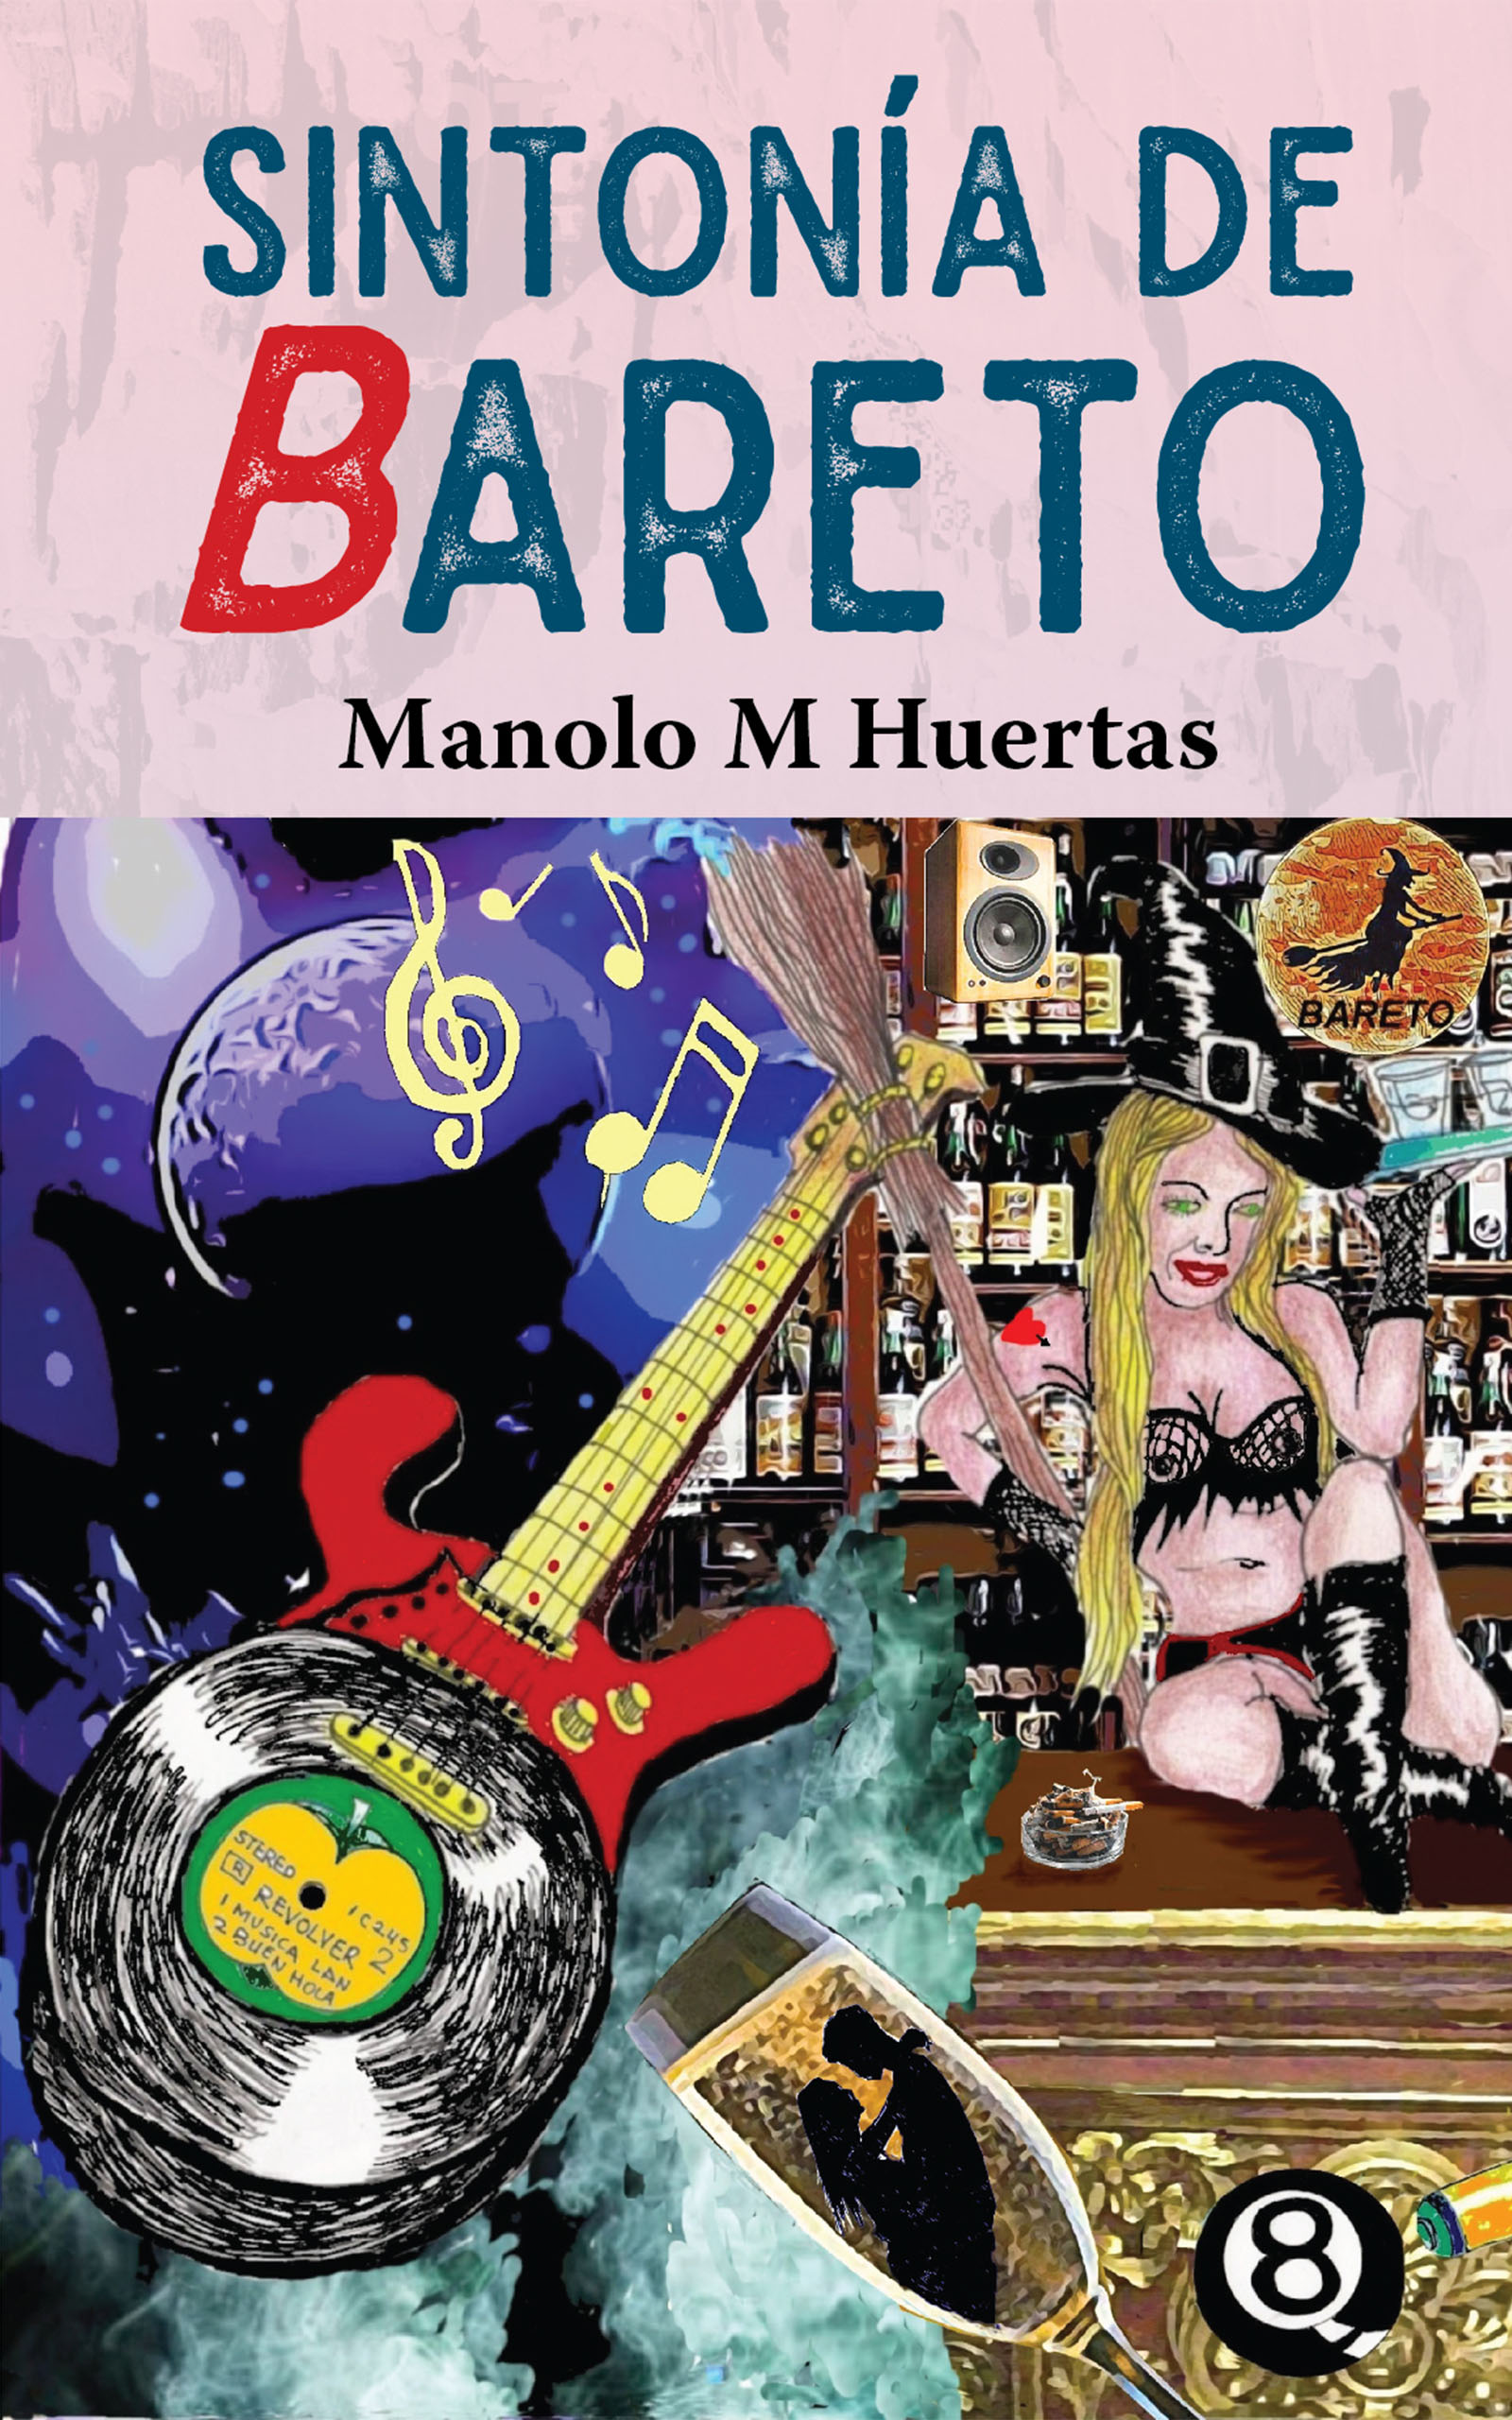 Sintonía de Bareto, de Manolo M Huertas